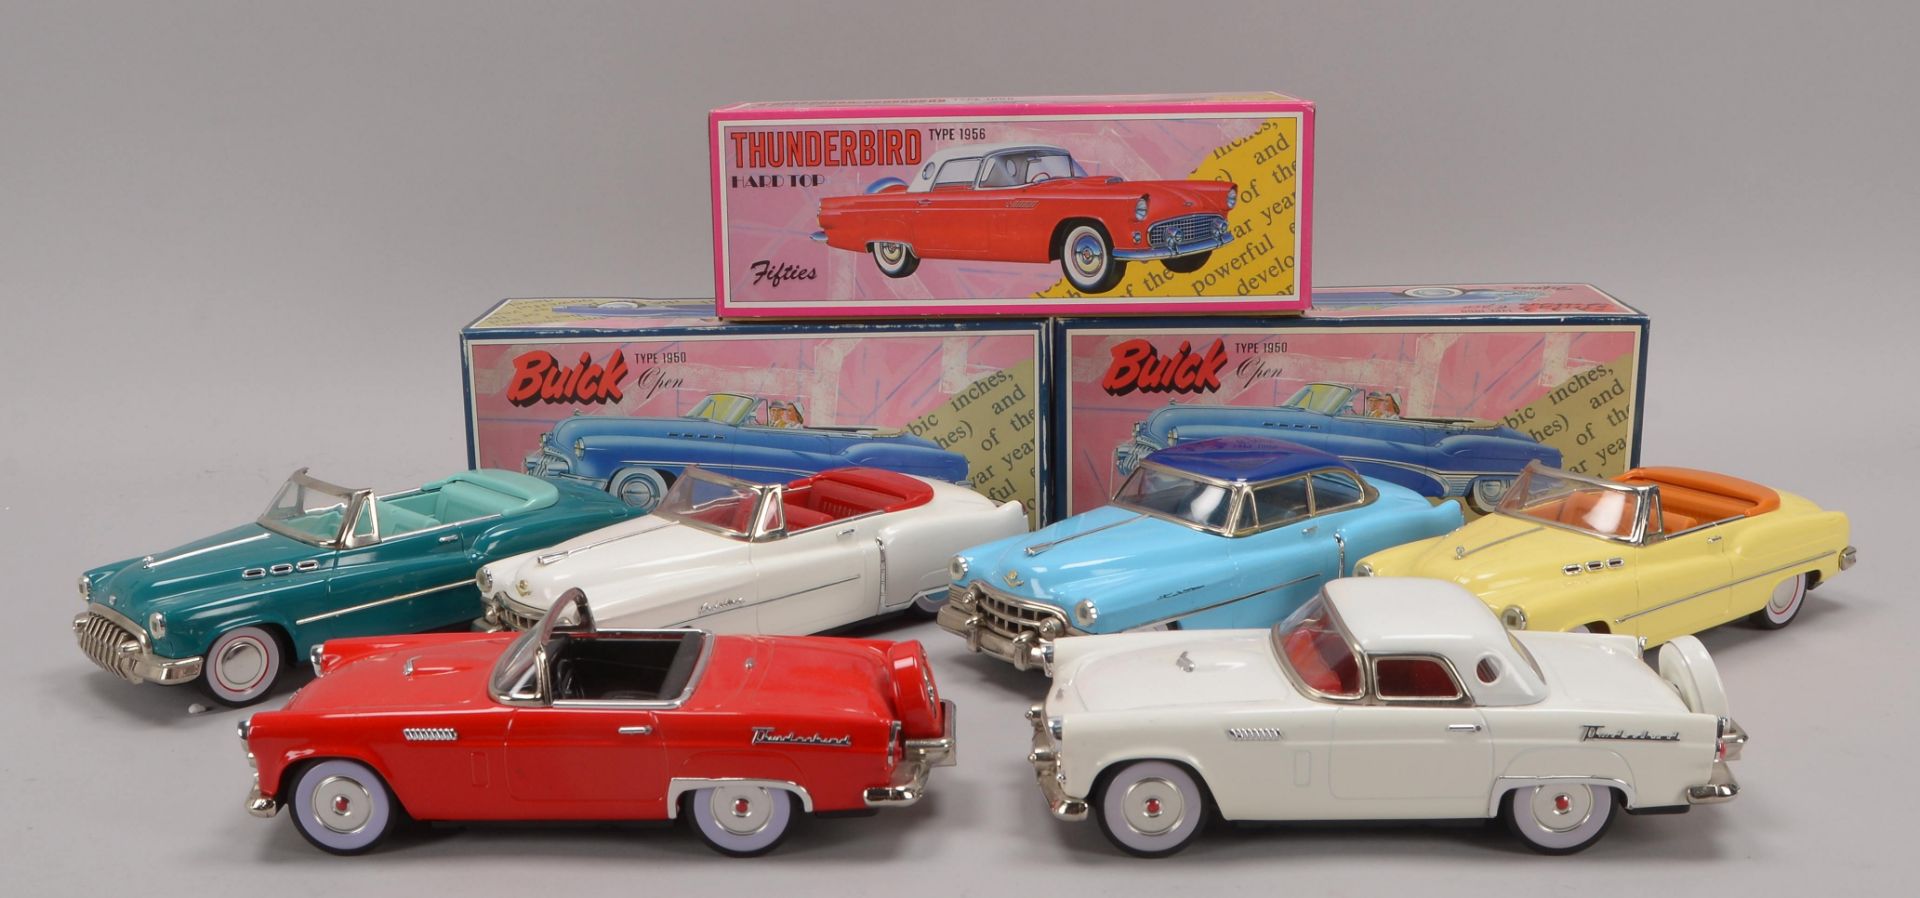 Konvolut Sammler-Modellautos, Serie -Fifties-, 6 Stueck: 2x -Buick 1950-, -Thunderbird 1956-, -Cadil